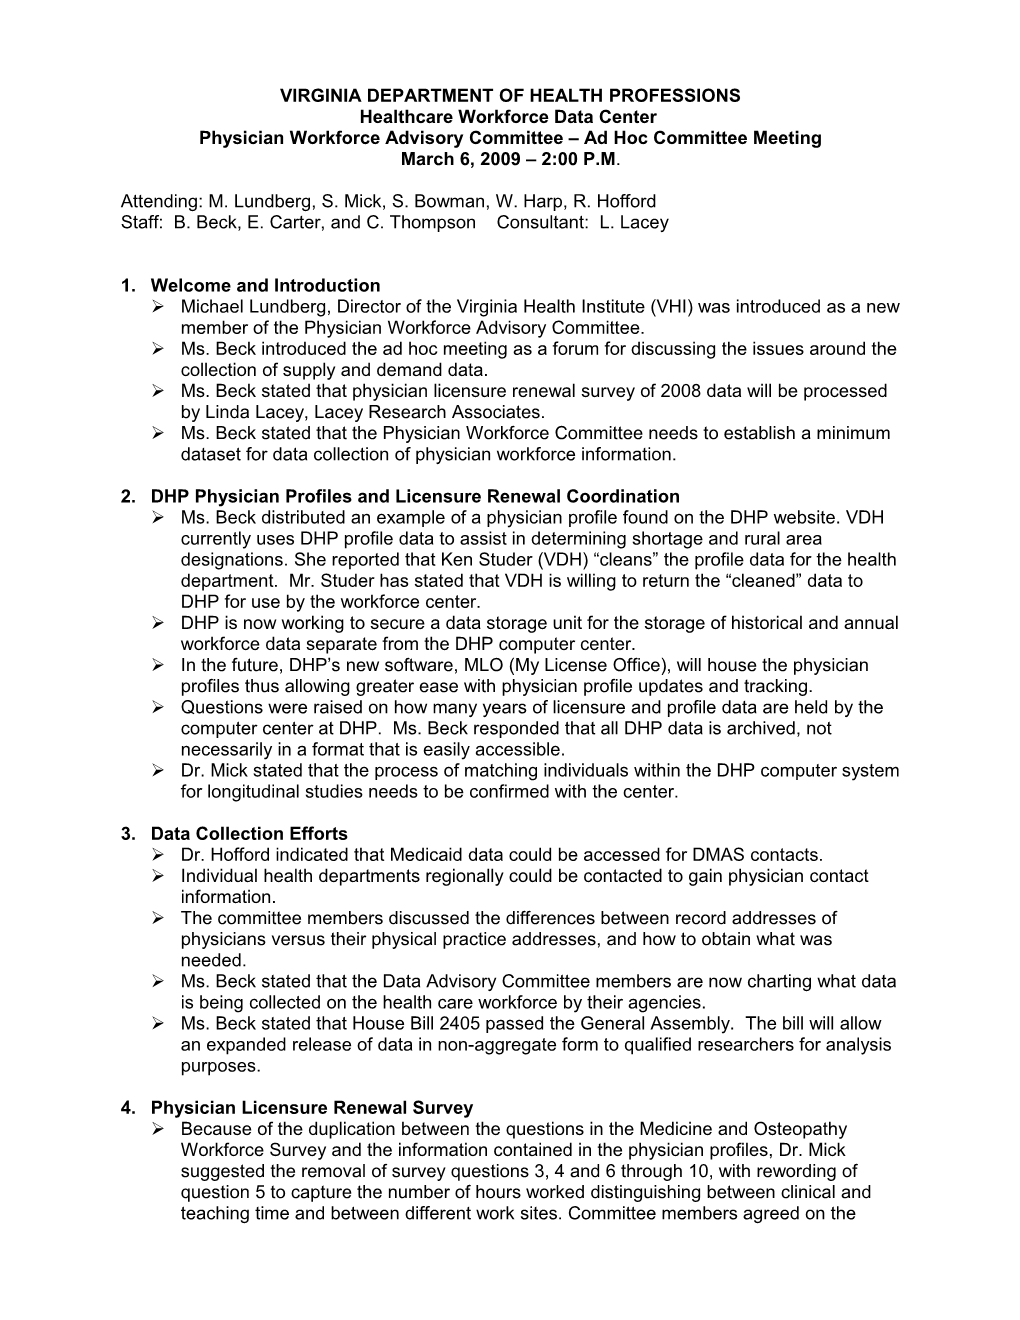 Workforce Advisory Committee Minutes 3-6-09